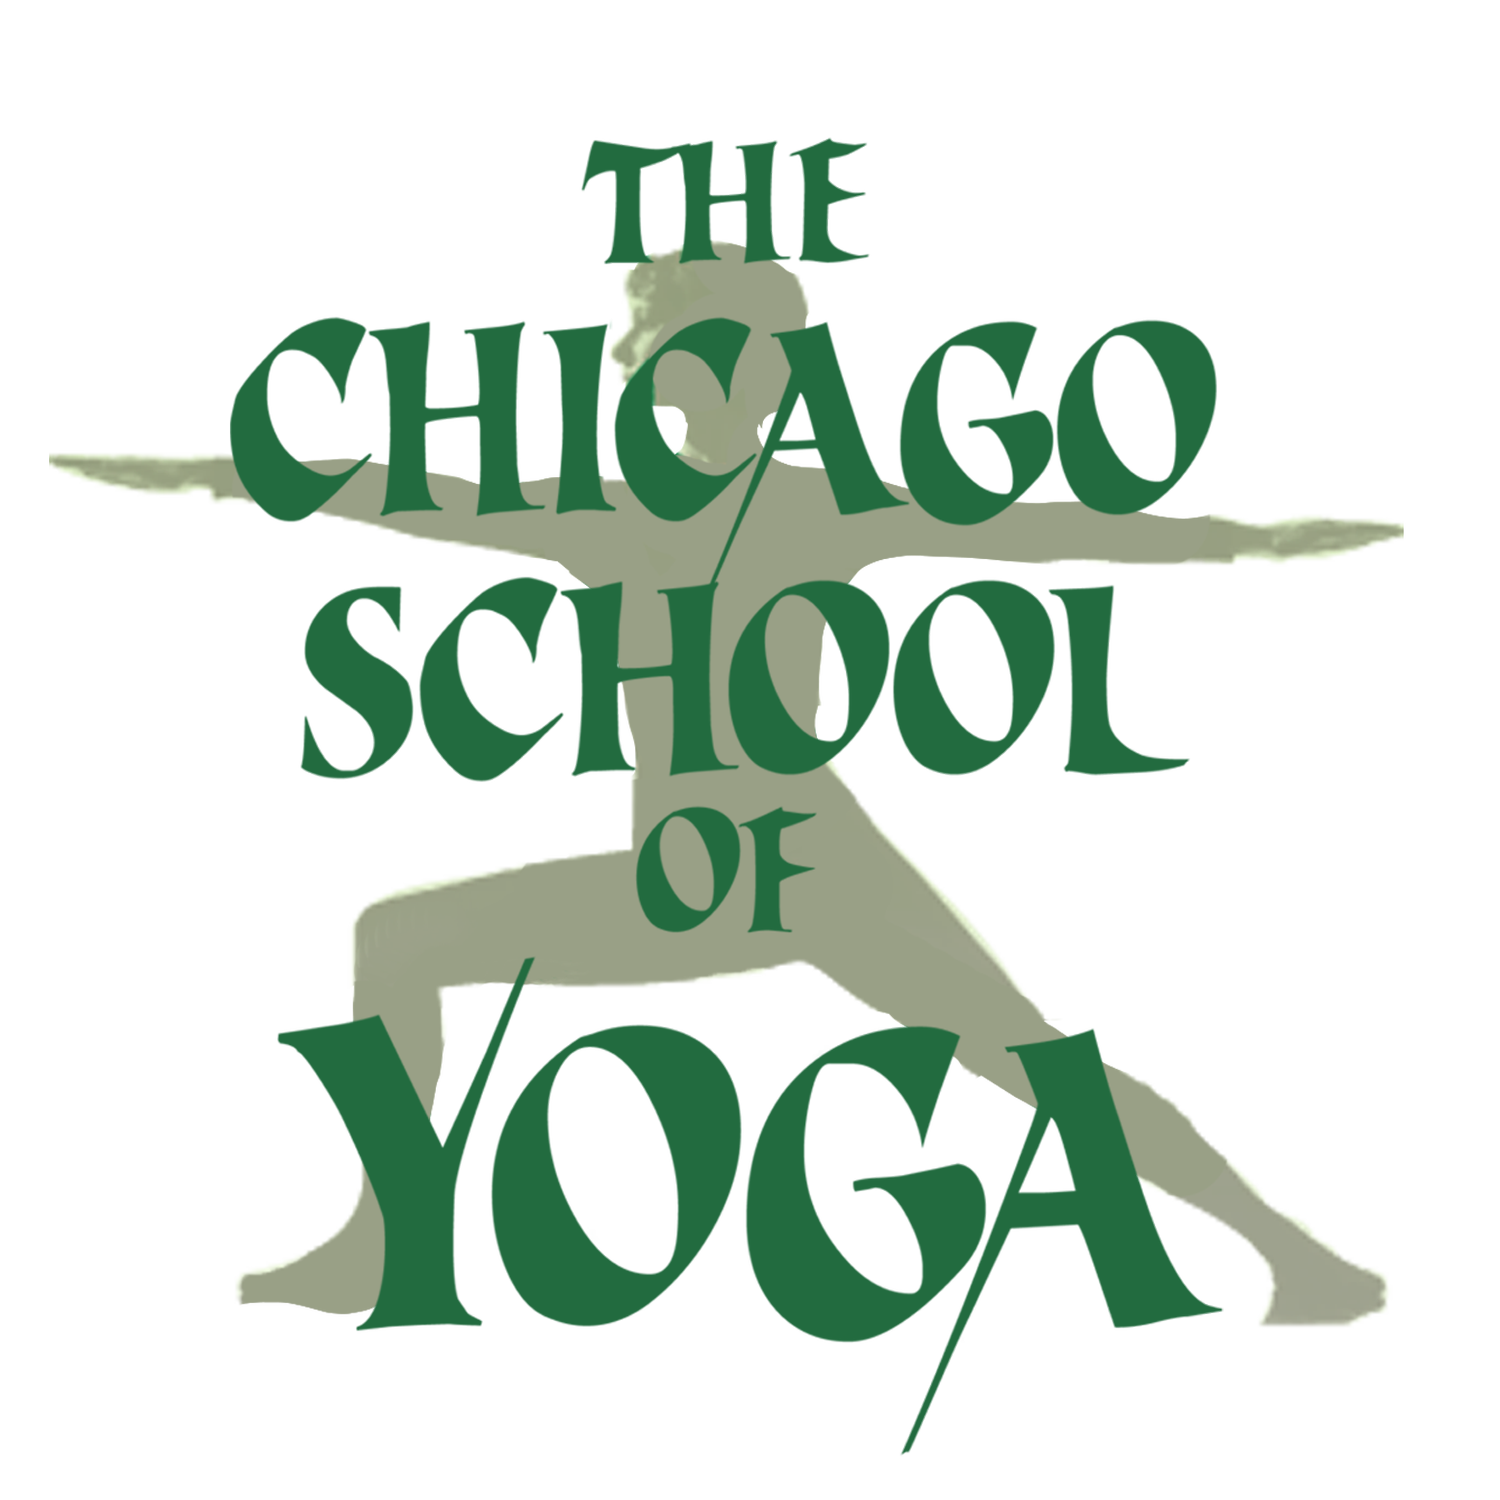 The Chicago School of Yoga